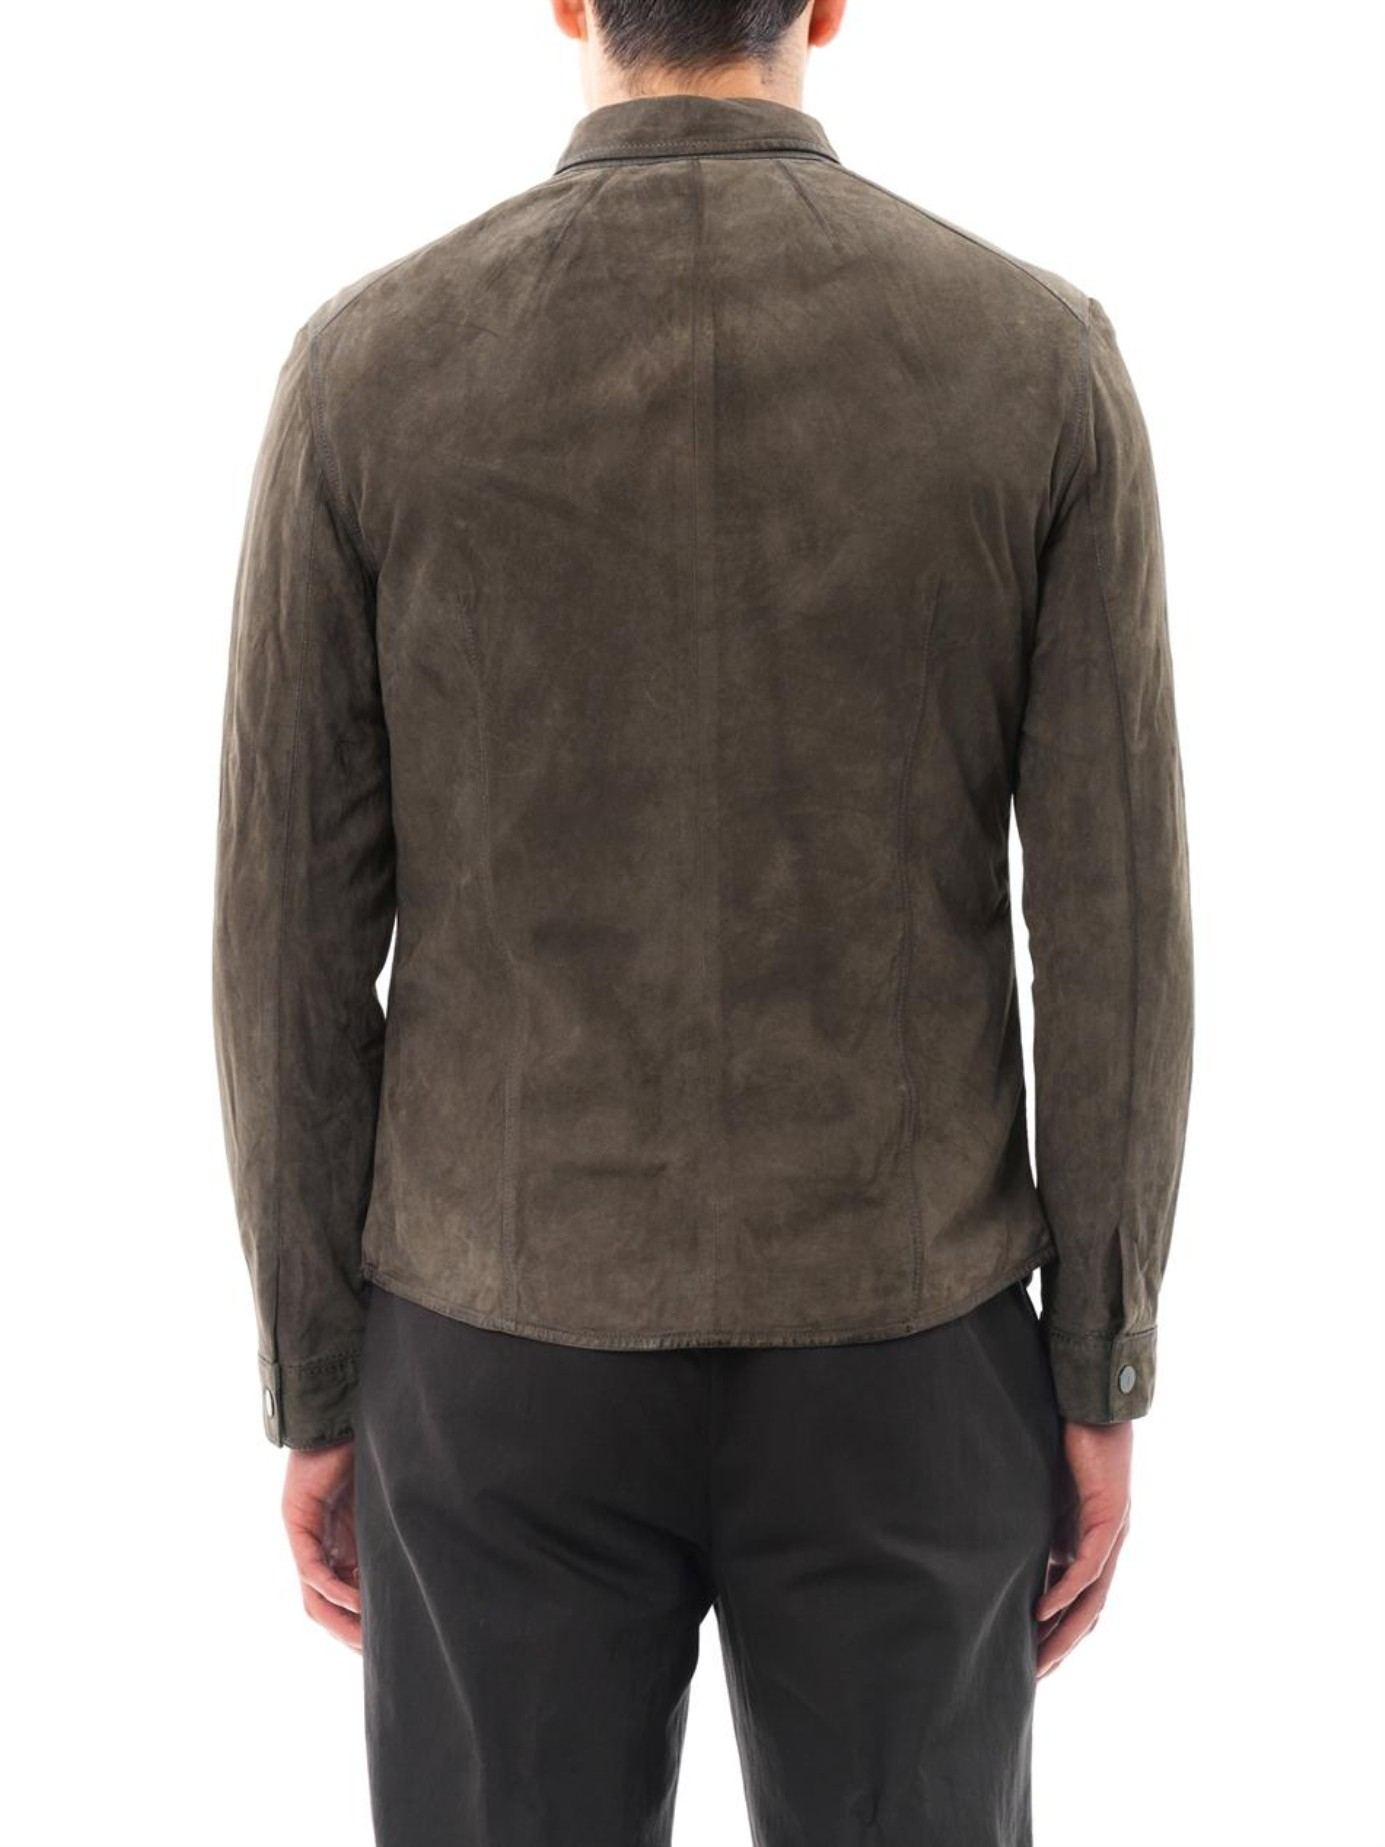 John Varvatos Goat-Suede Shirt Jacket in Beige (Brown) for Men - Lyst